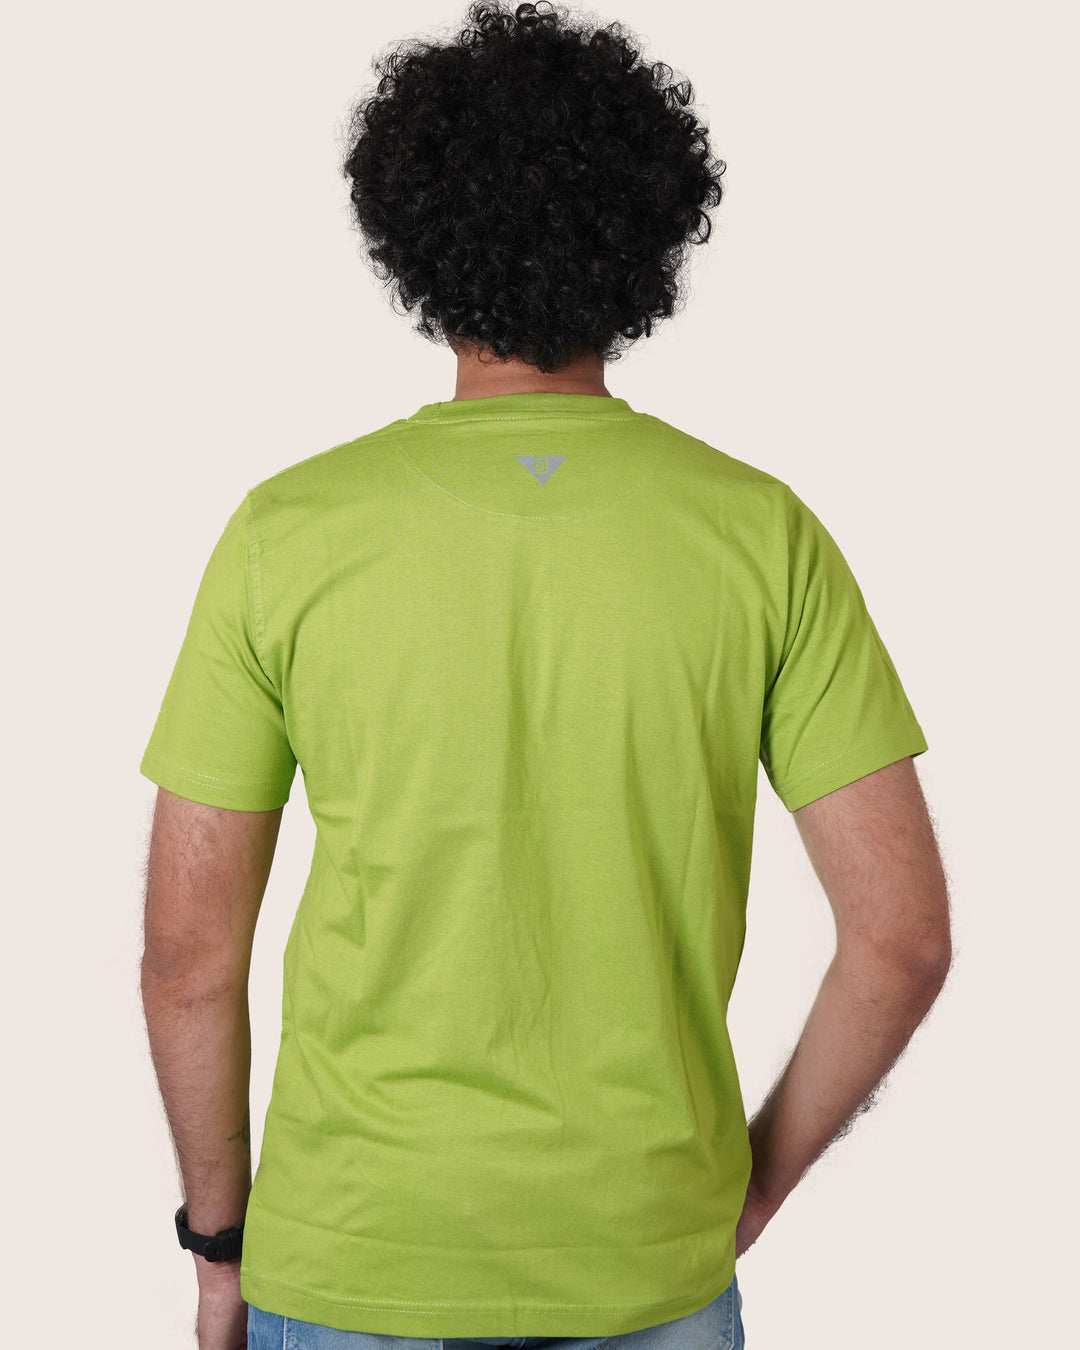 Feathersoft Home Comfort Men's Crewneck T-Shirt: Olive Green